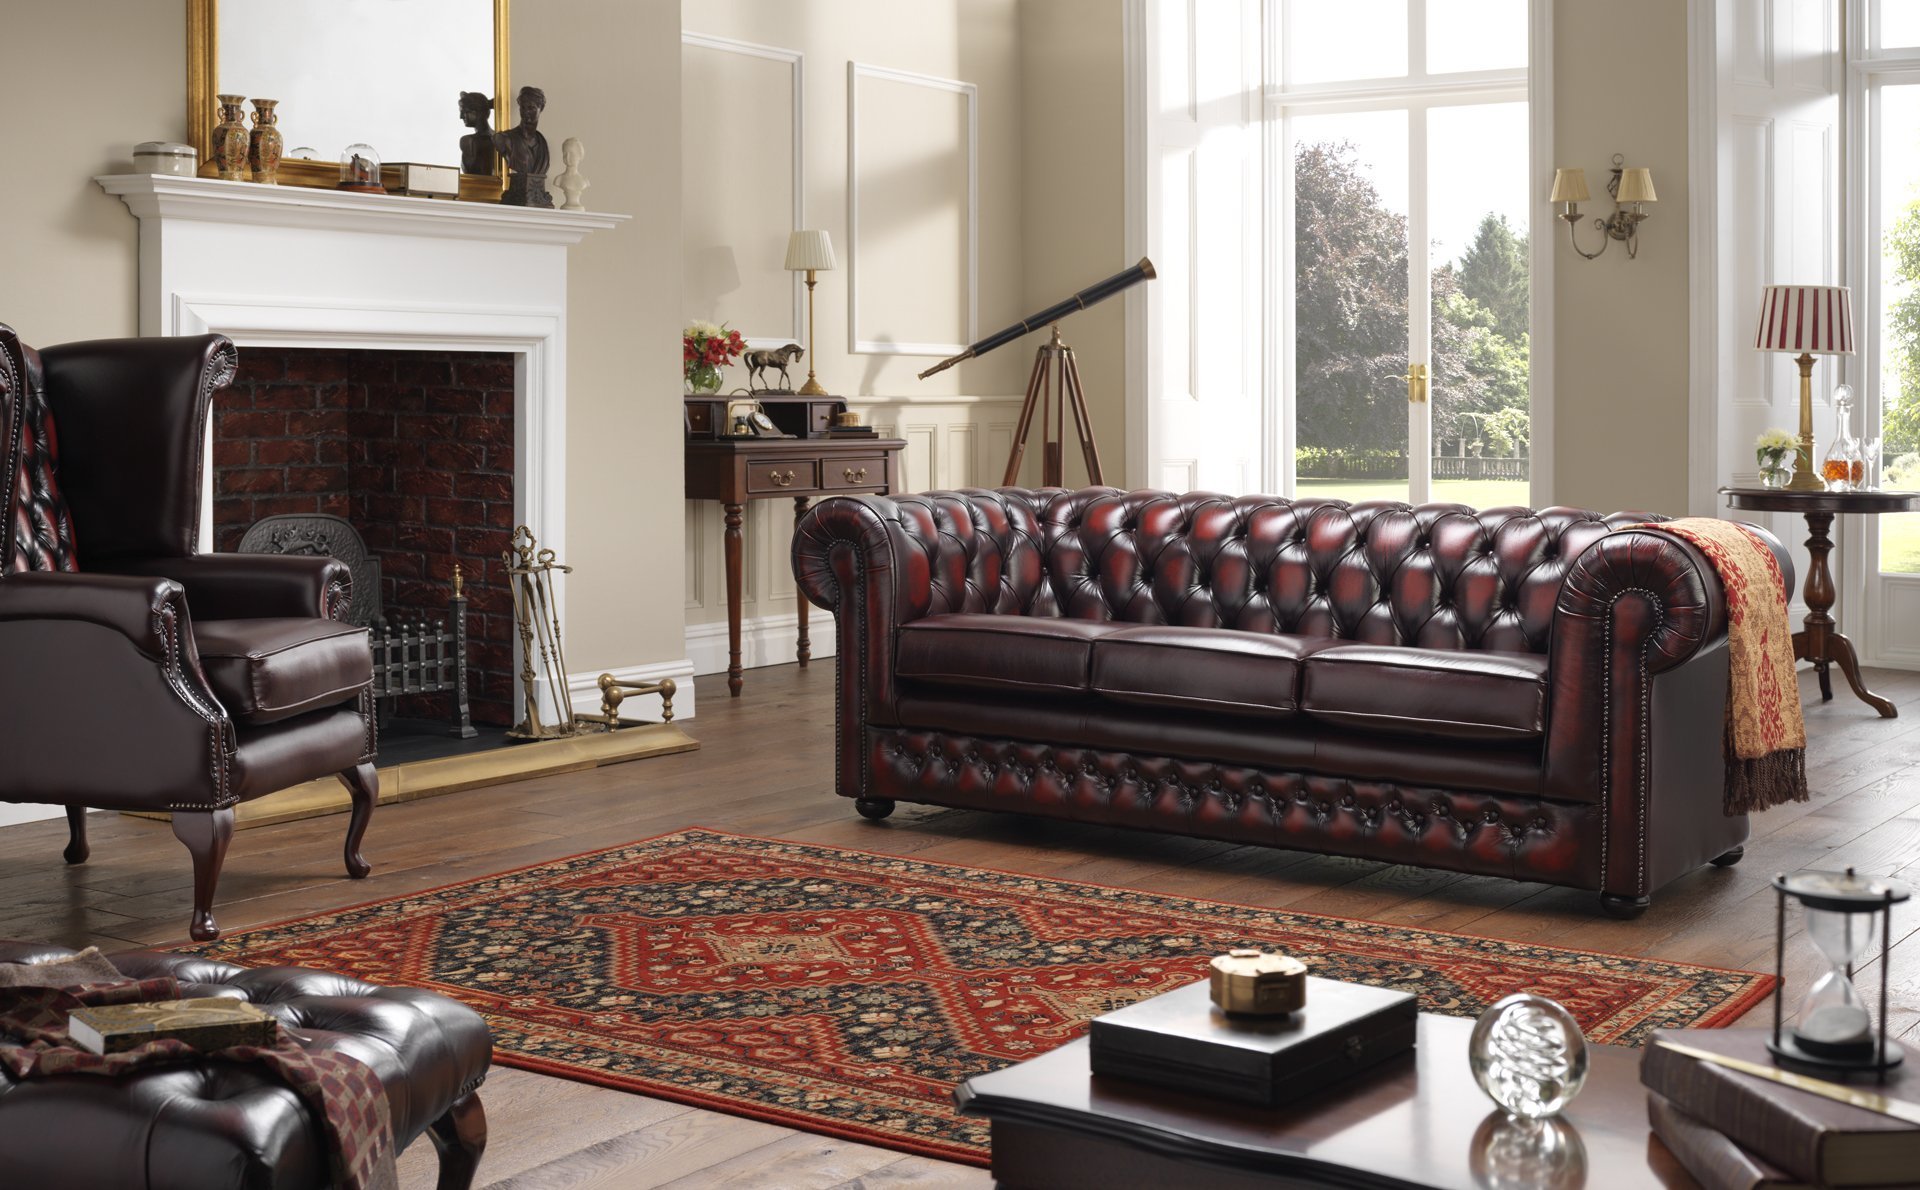 modern chesterfield living room ideas